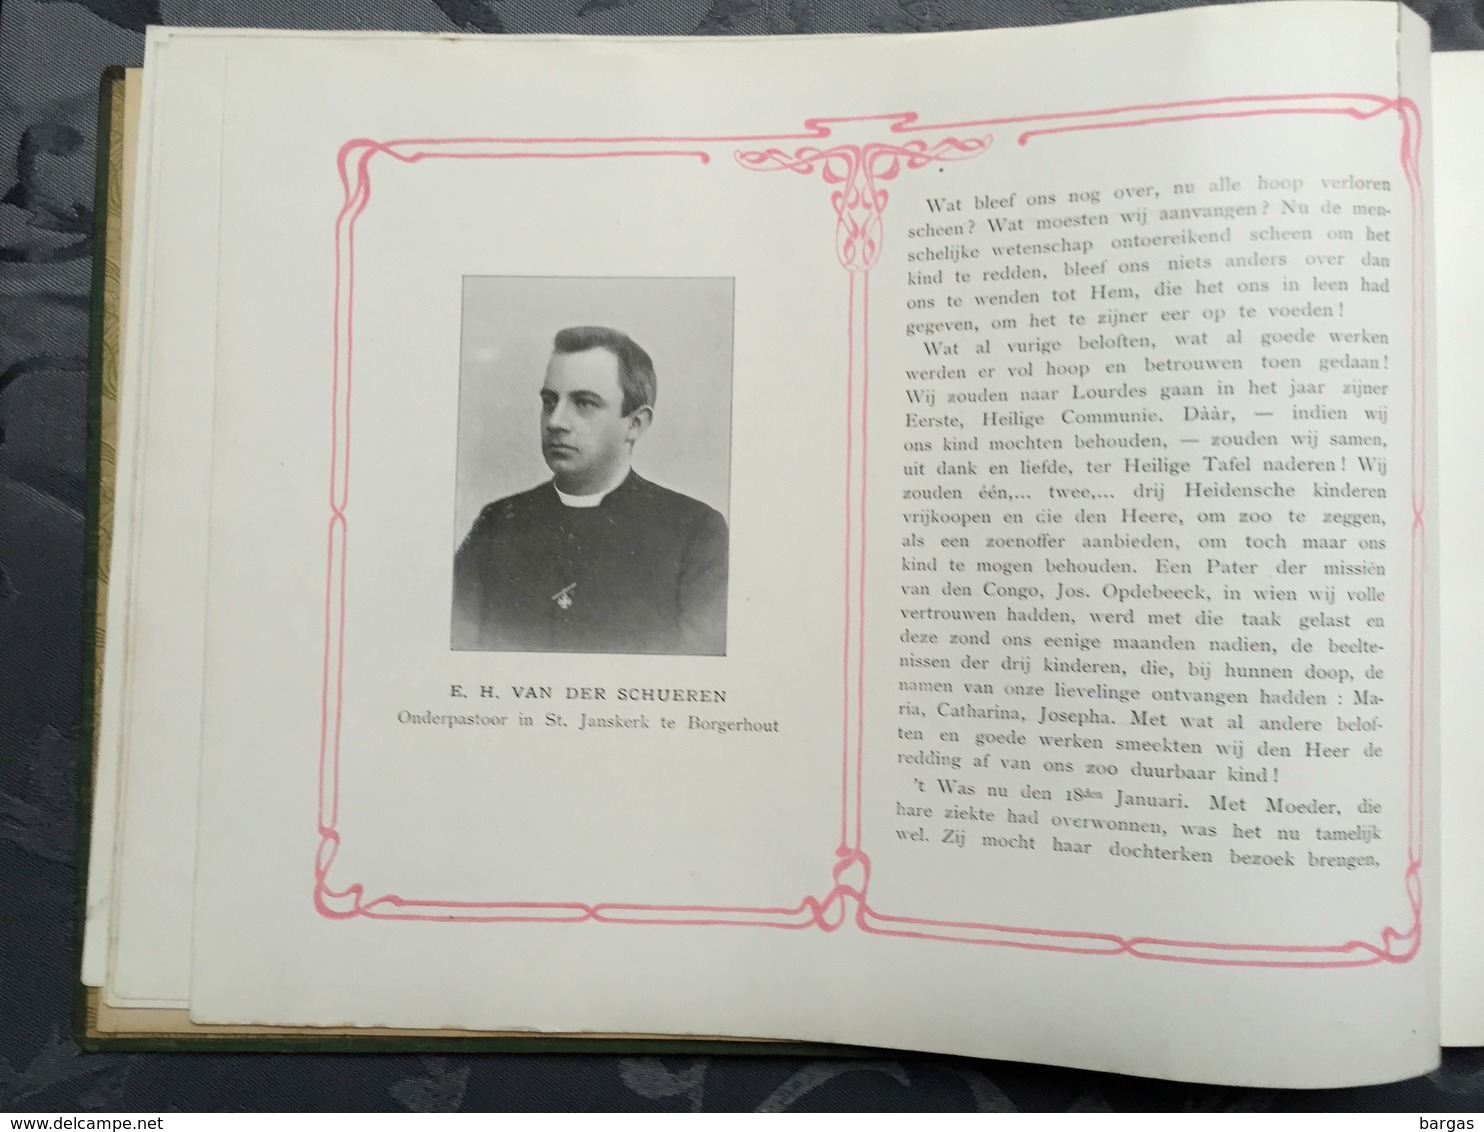 CURIOSA 1902 gedenkboek communie De Gijger te Borgerhout anvers kapel der zuster Onze lieve vrouw art nouveau 156paginas